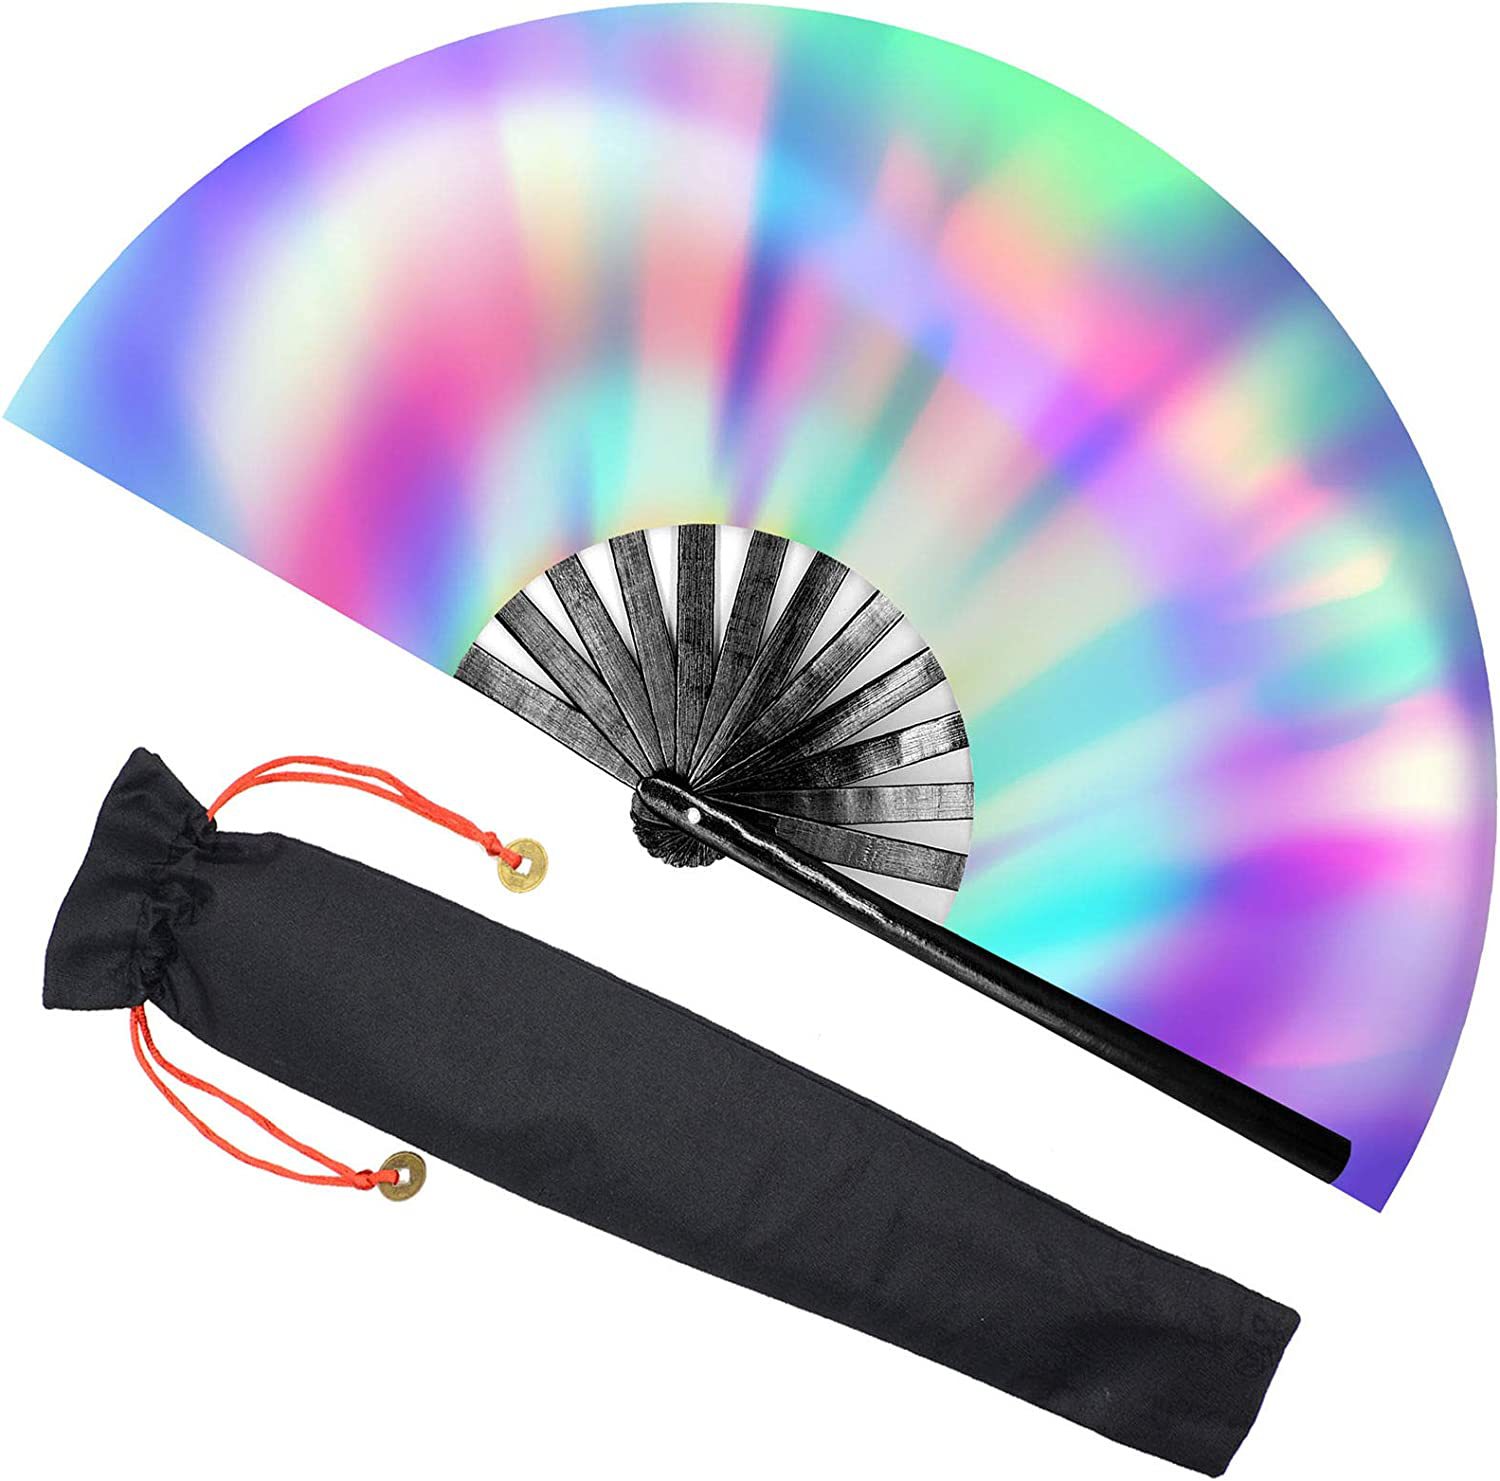 Fluorescent UV Printing Fan